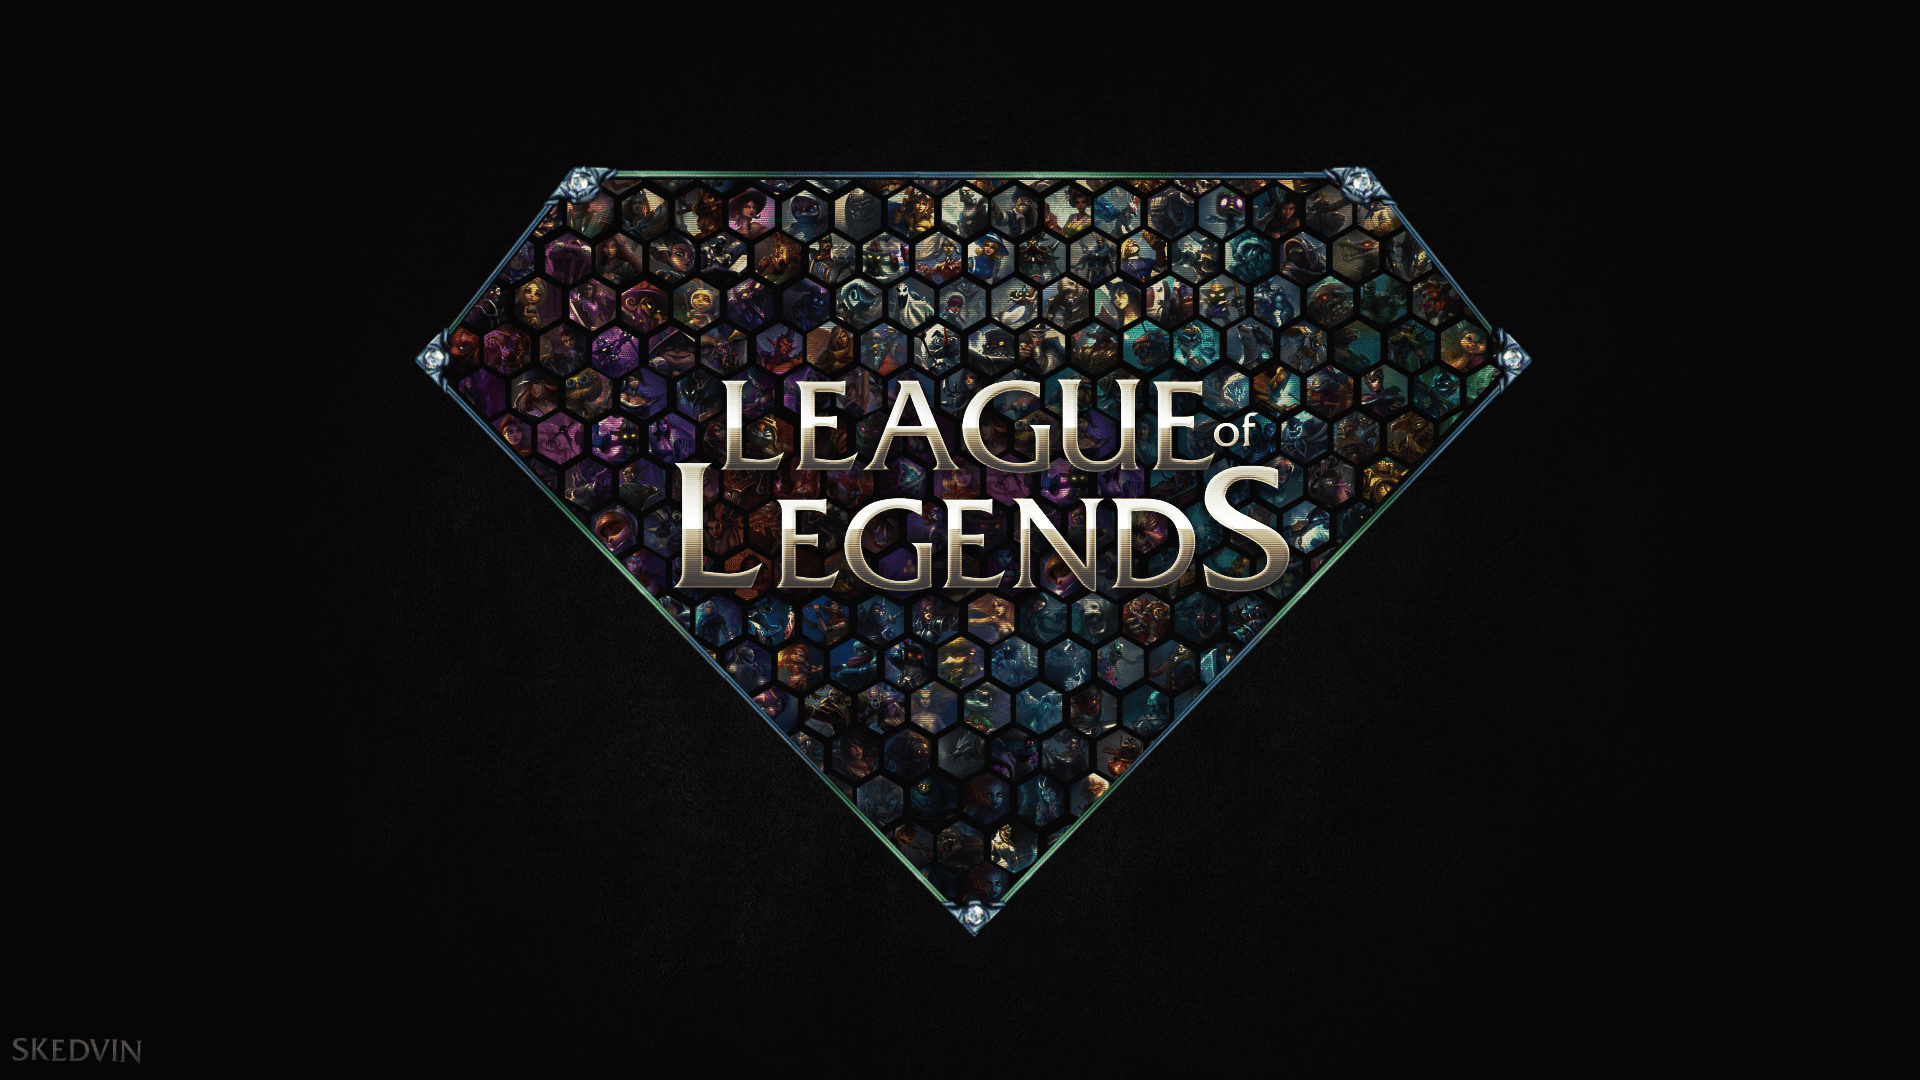   A cool super-man-shaped logo of League of Legends